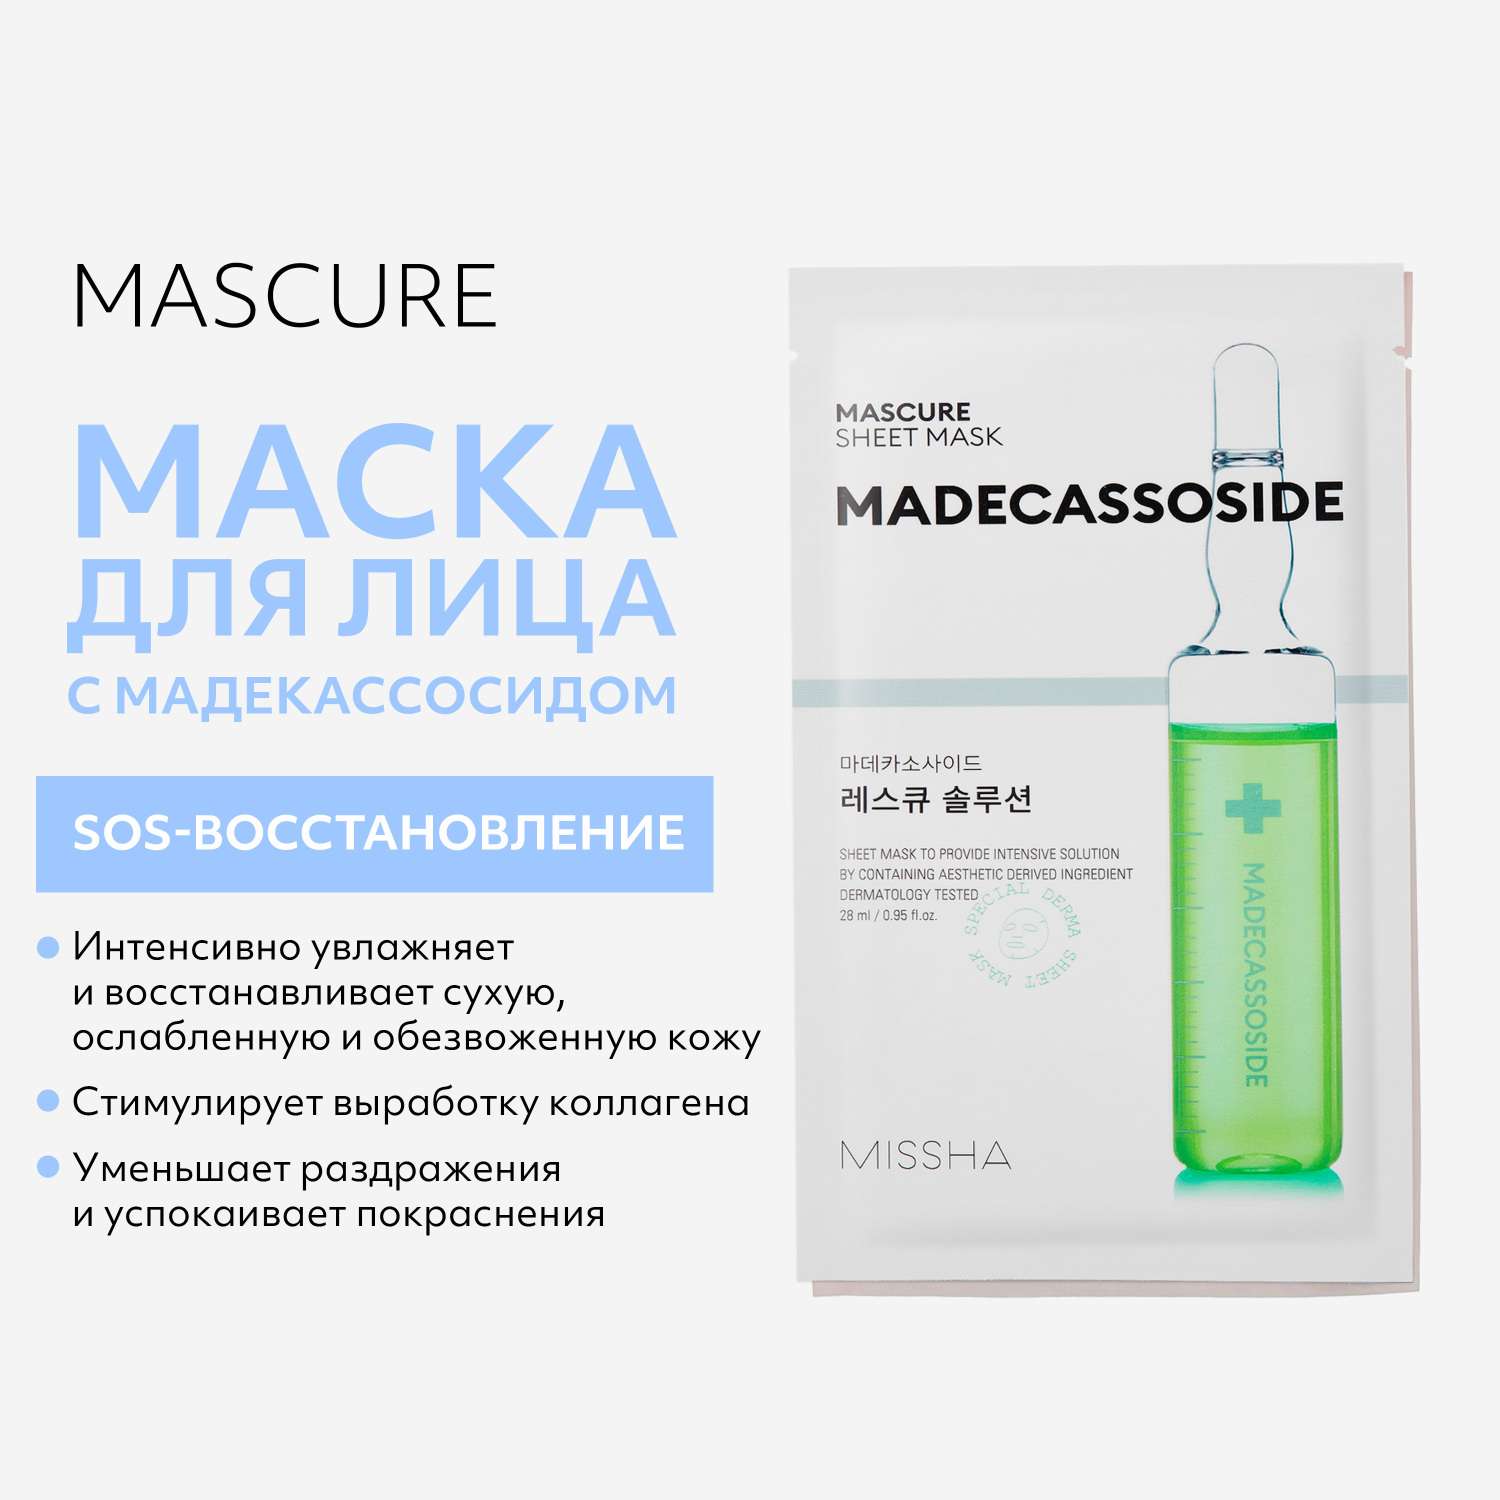 Маска тканевая MISSHA Mascure SOS с мадекаccосидом для восстановления ослабленной кожи 28 мл - фото 2